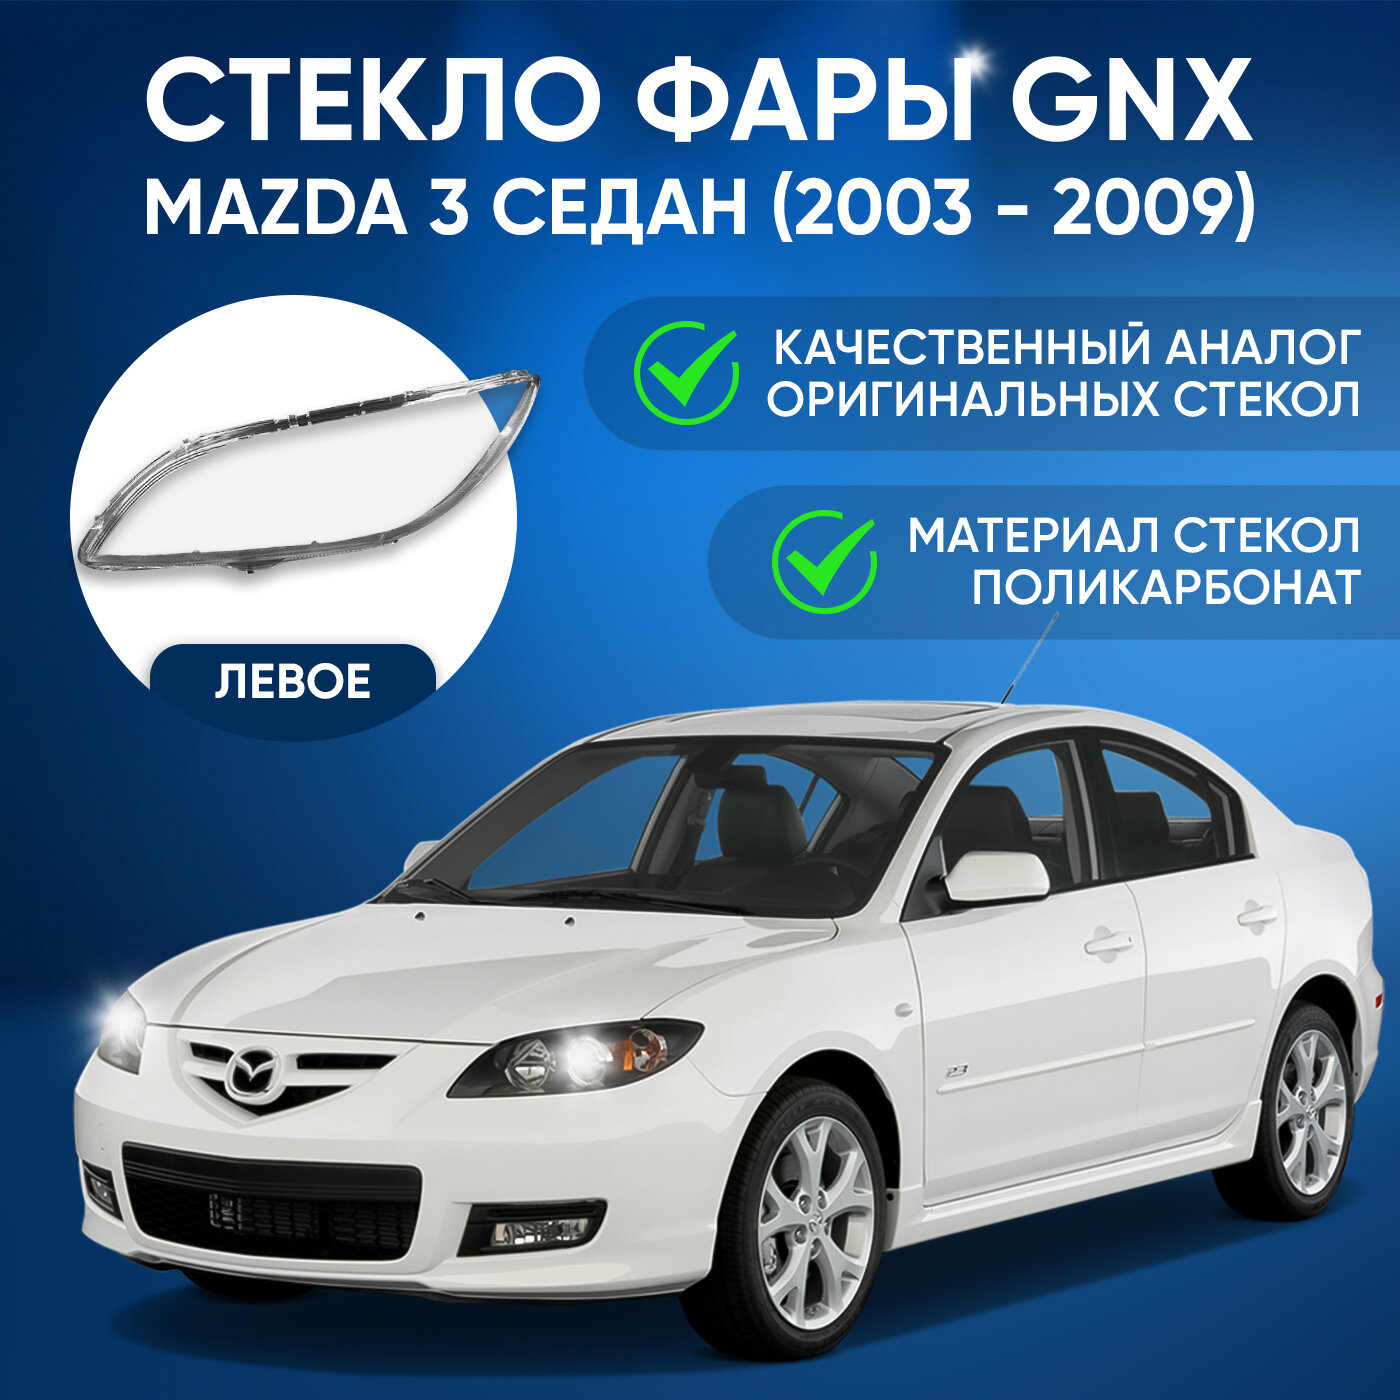 Стекло фары Mazda 3 BK седан (2003 - 2009 г. в.), левое, GNX, поликарбонат, для автомобилей Мазда 3